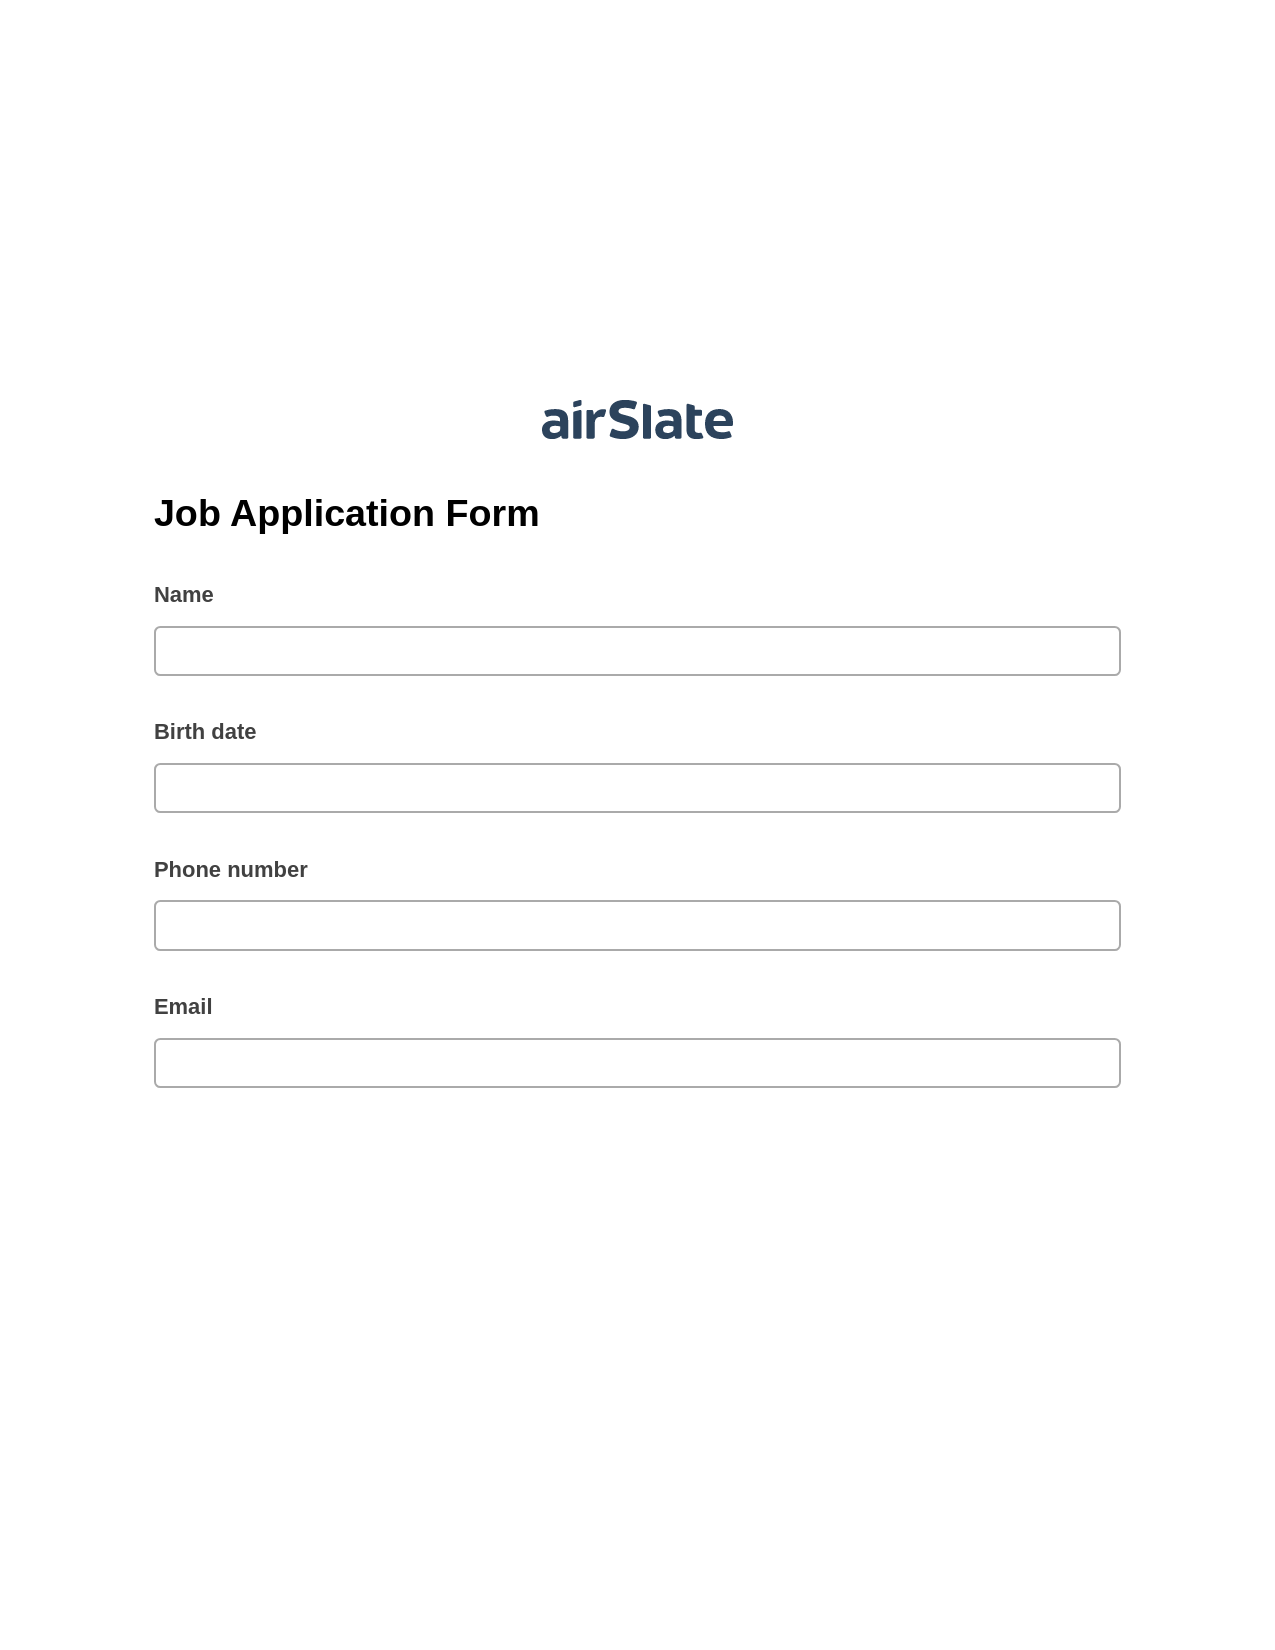 Job Application Form Pre-fill Slate from MS Dynamics 365 Records Bot, Email Notification Bot, Slack Notification Postfinish Bot